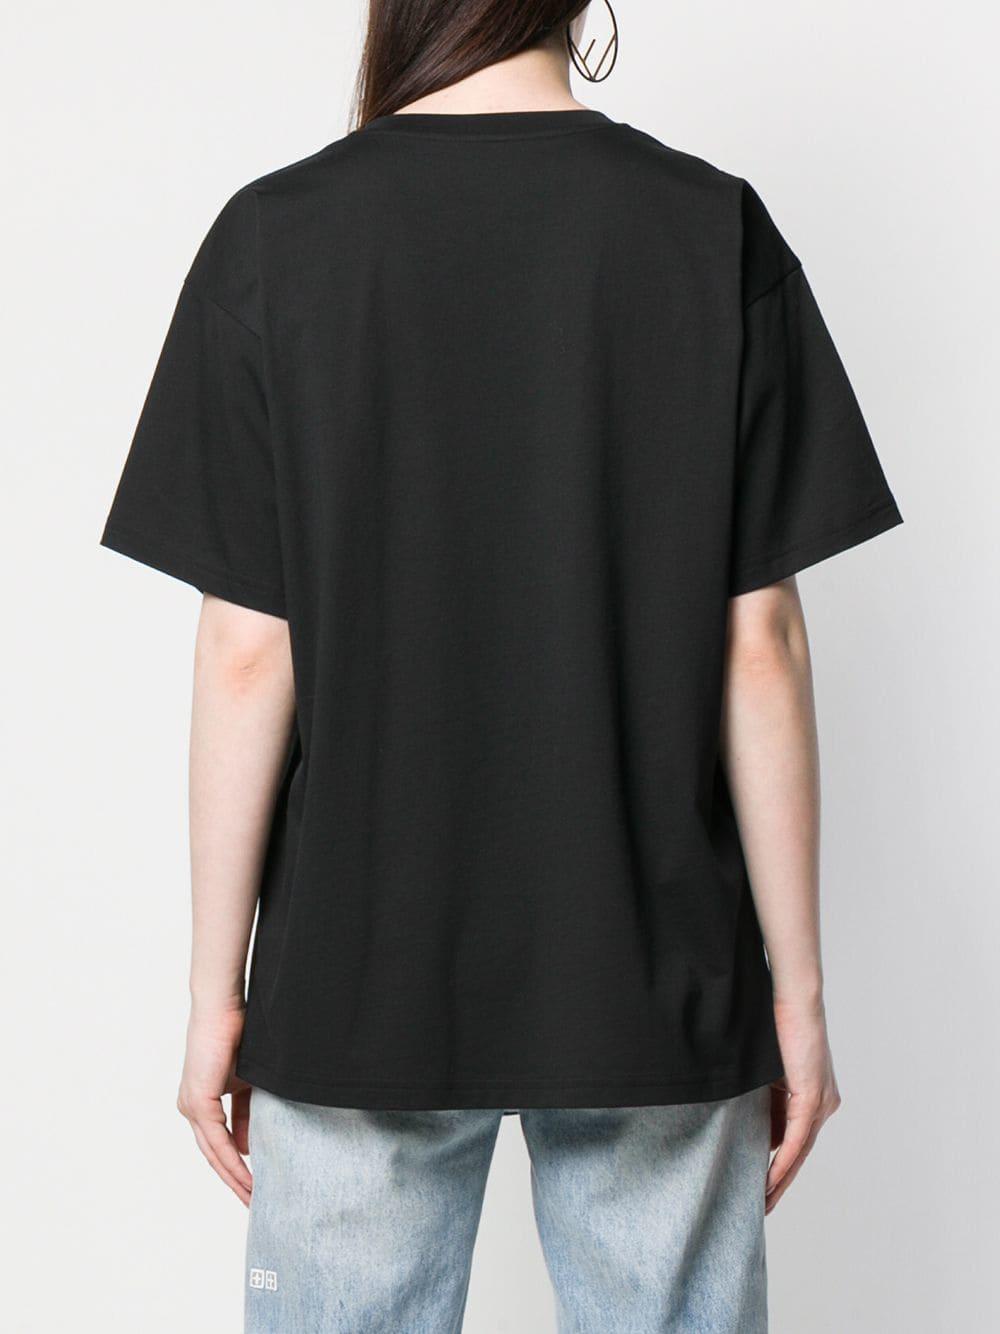 Moschino Teddy Bear Patch Black Cotton T-shirt - Lyst